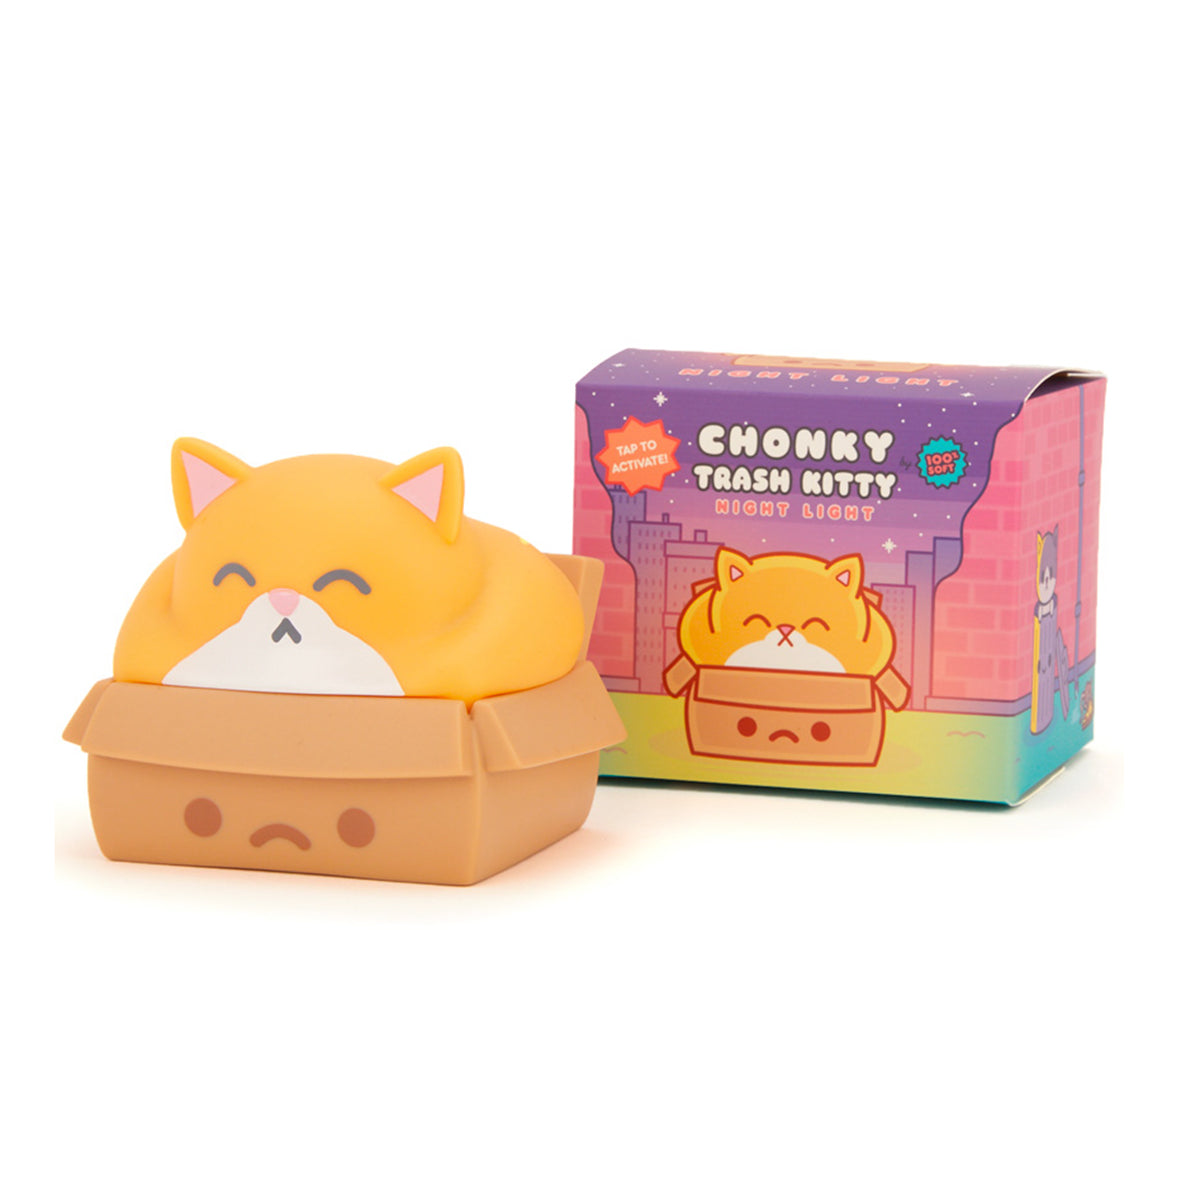 Chonky Trash Kitty Night Light with box.